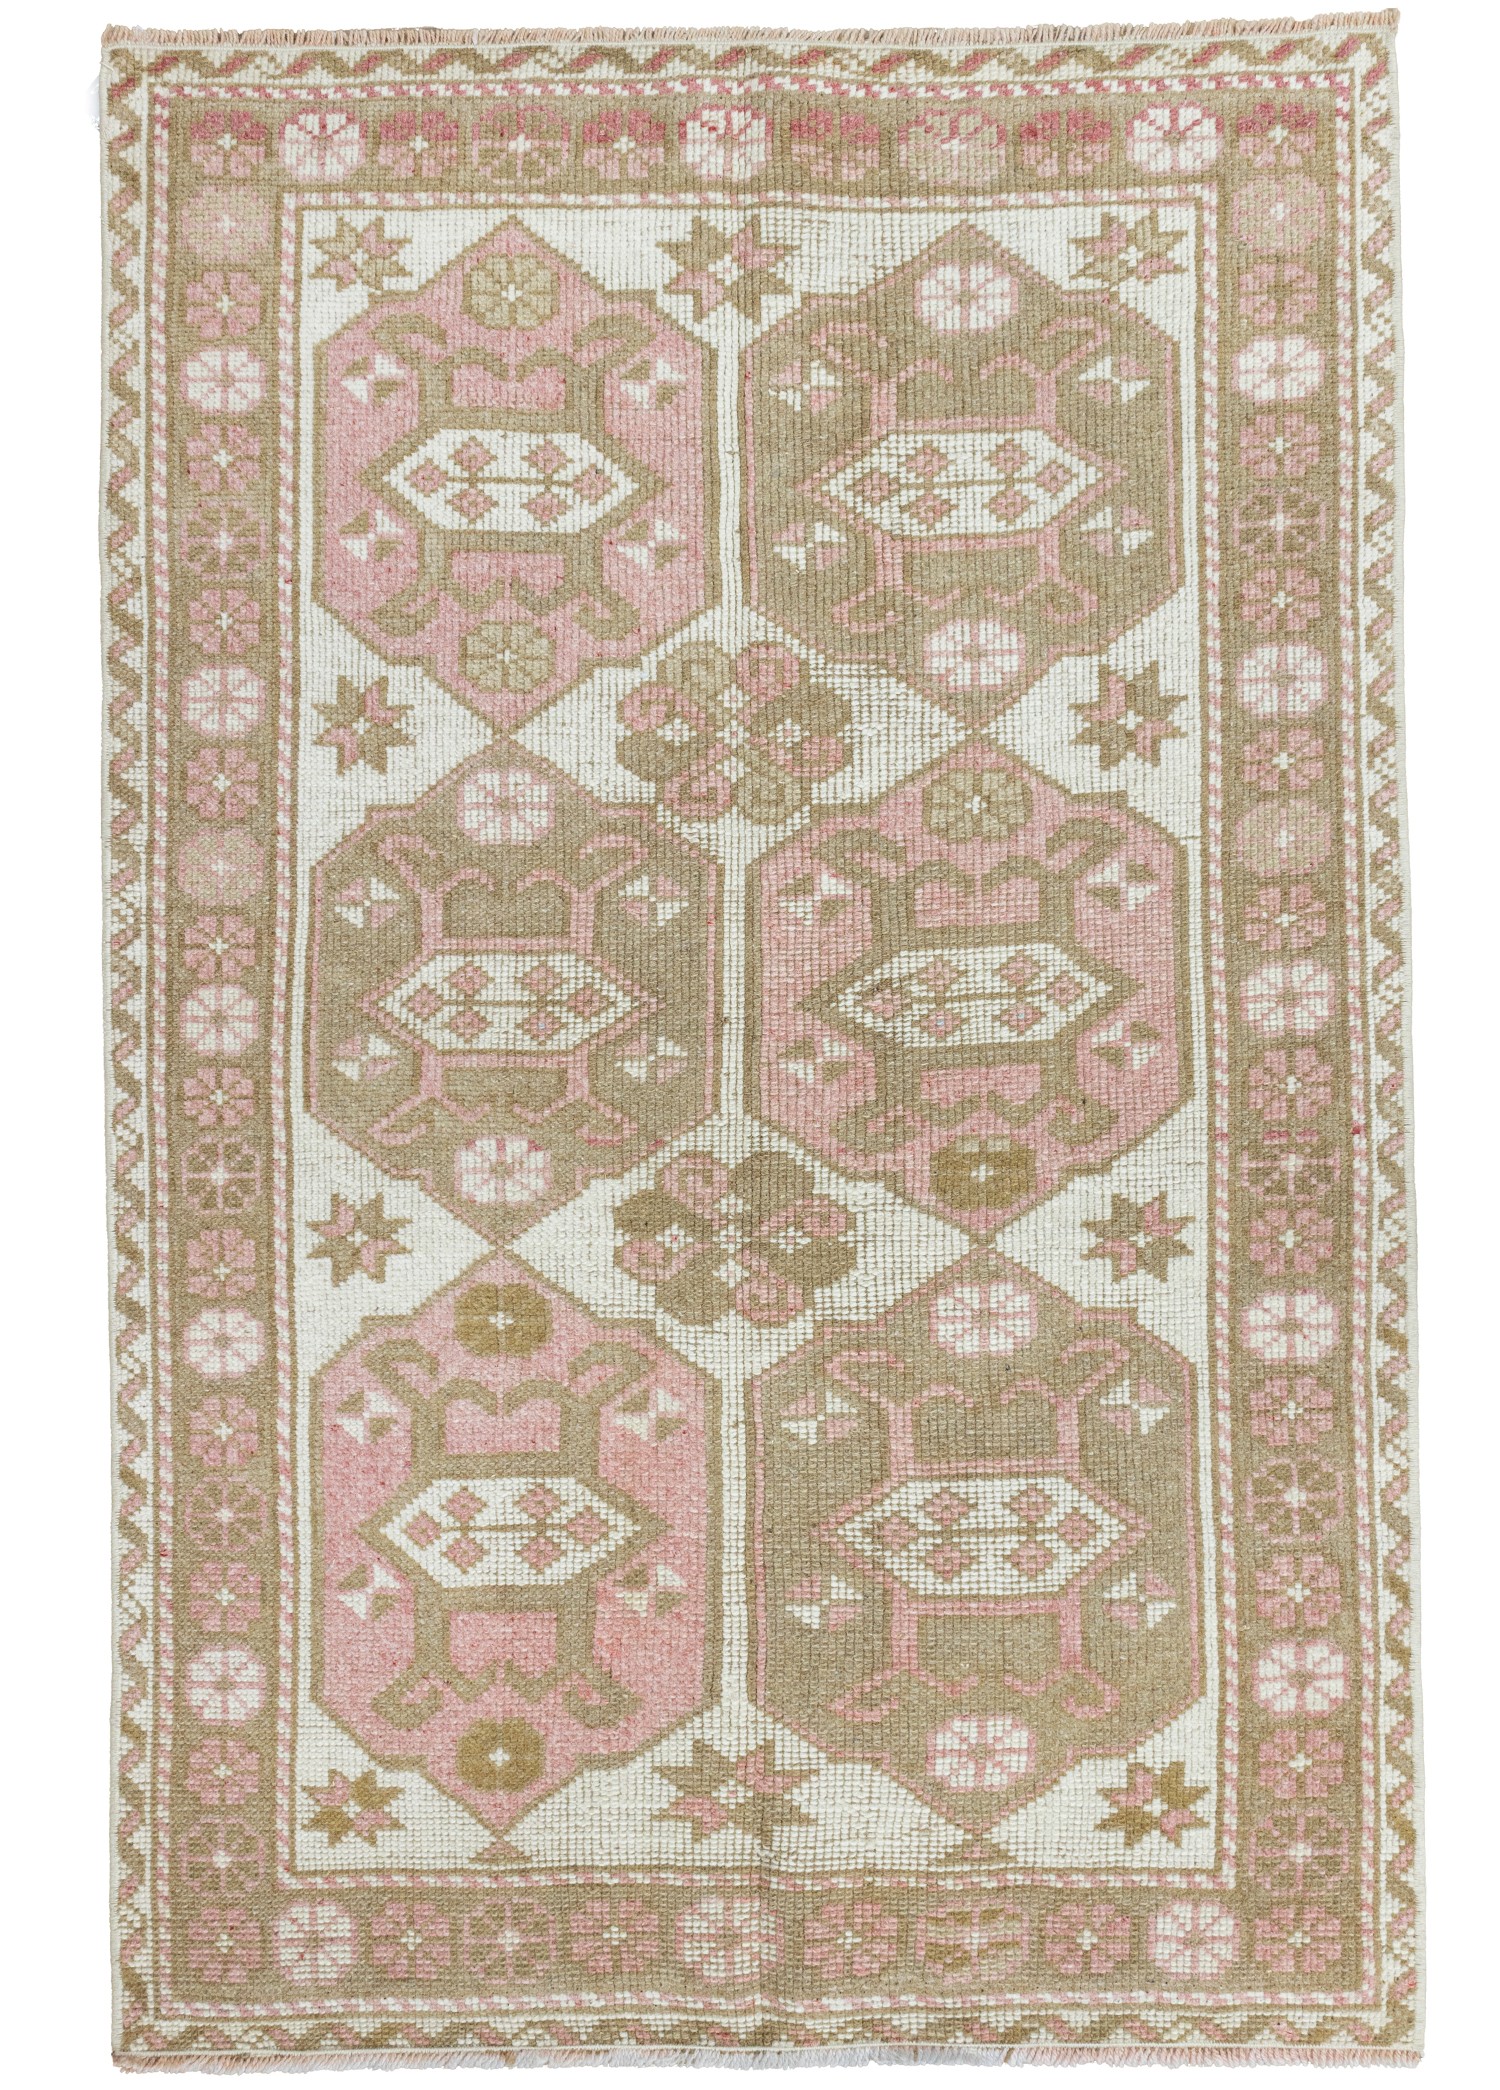 Kerec Star Pattern Handwoven Carpet 81x122 cm